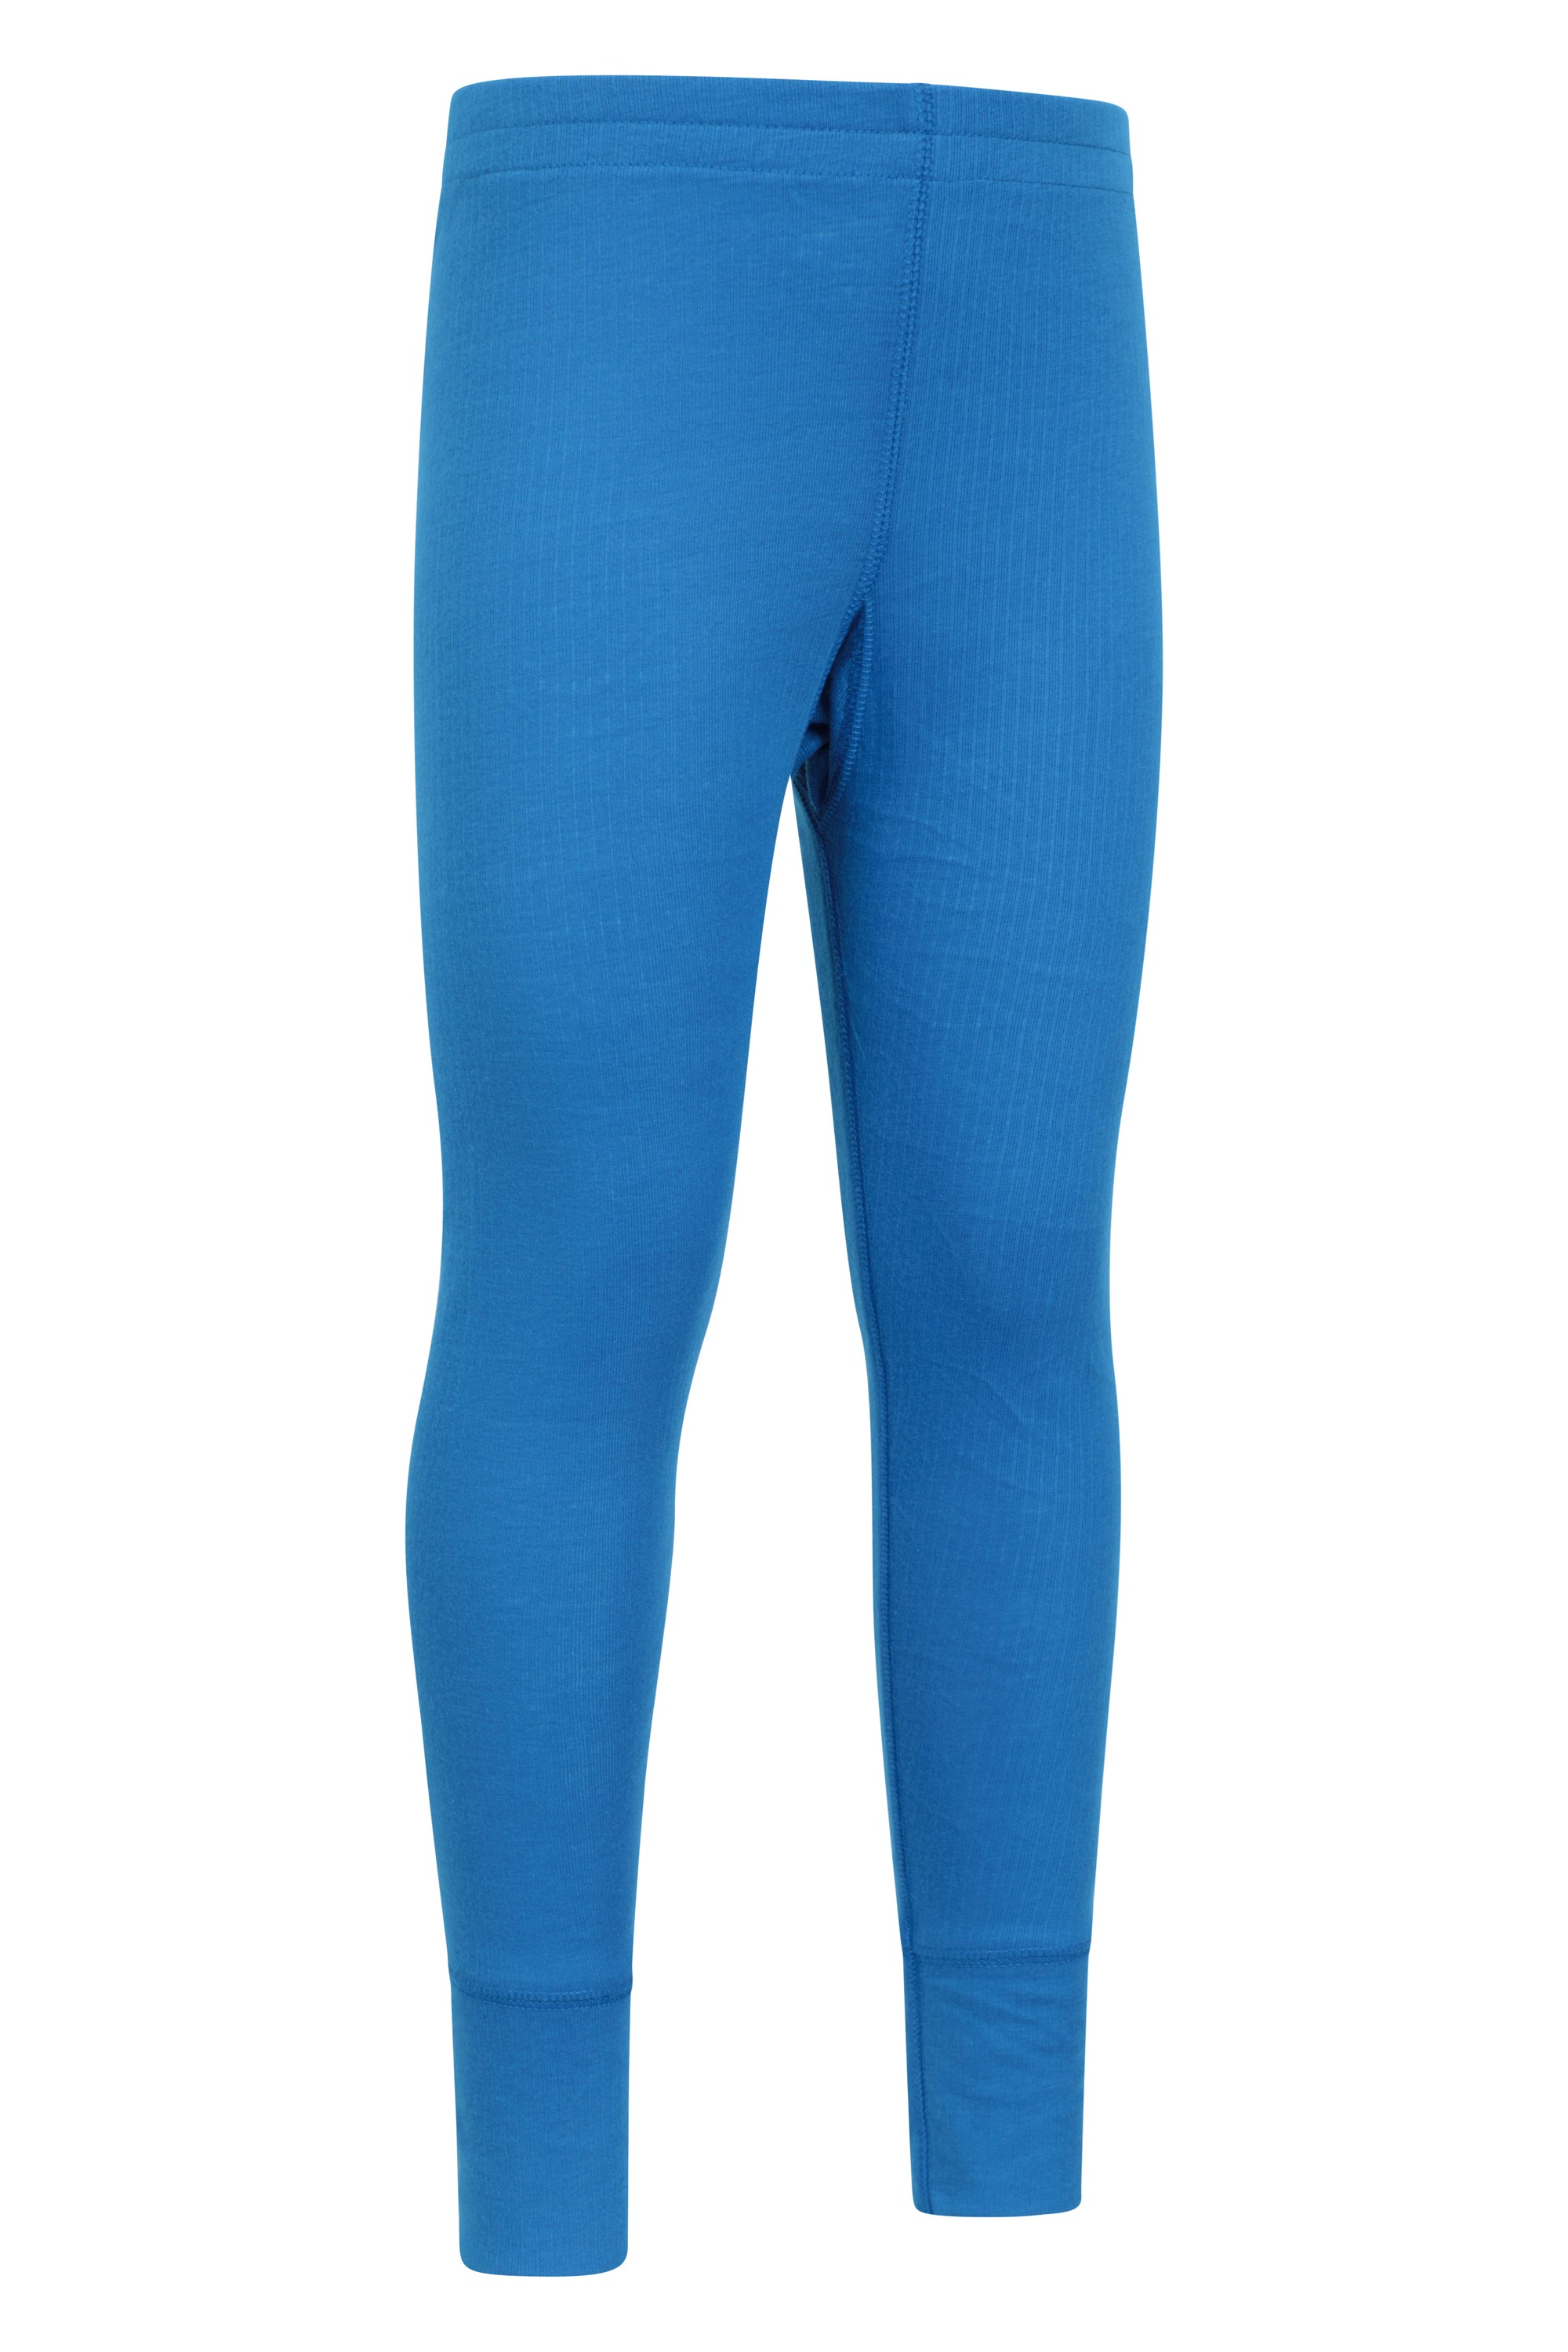 Thermal Underwear For Kids Thermal Long Johns Set Shirt & Pants Base Layer  Sport